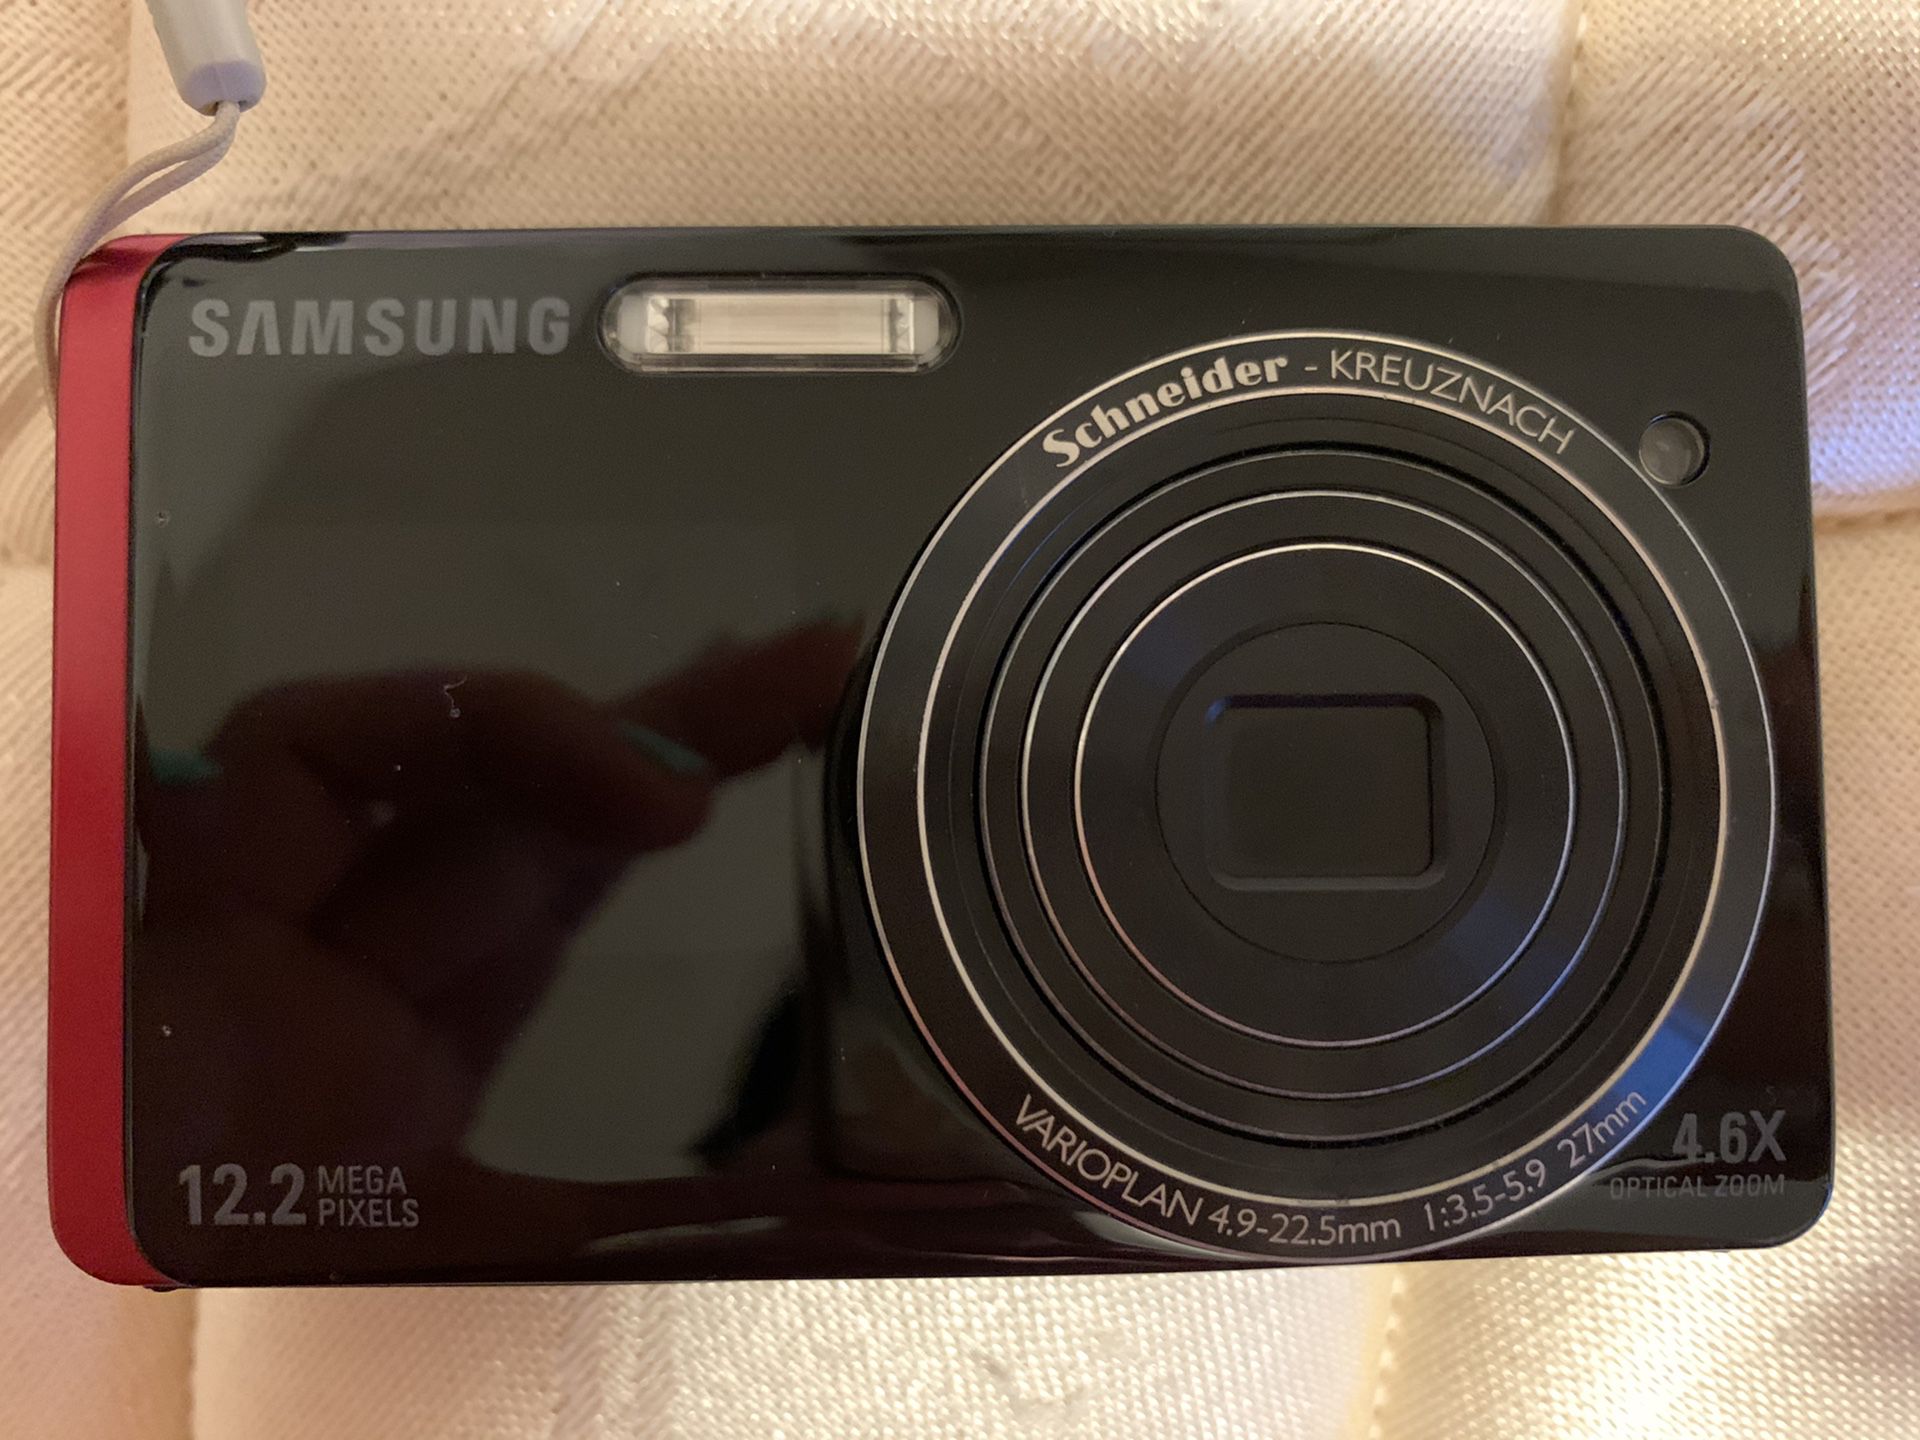 Samsung TL220 12.2MP Digital Camera 4.6X